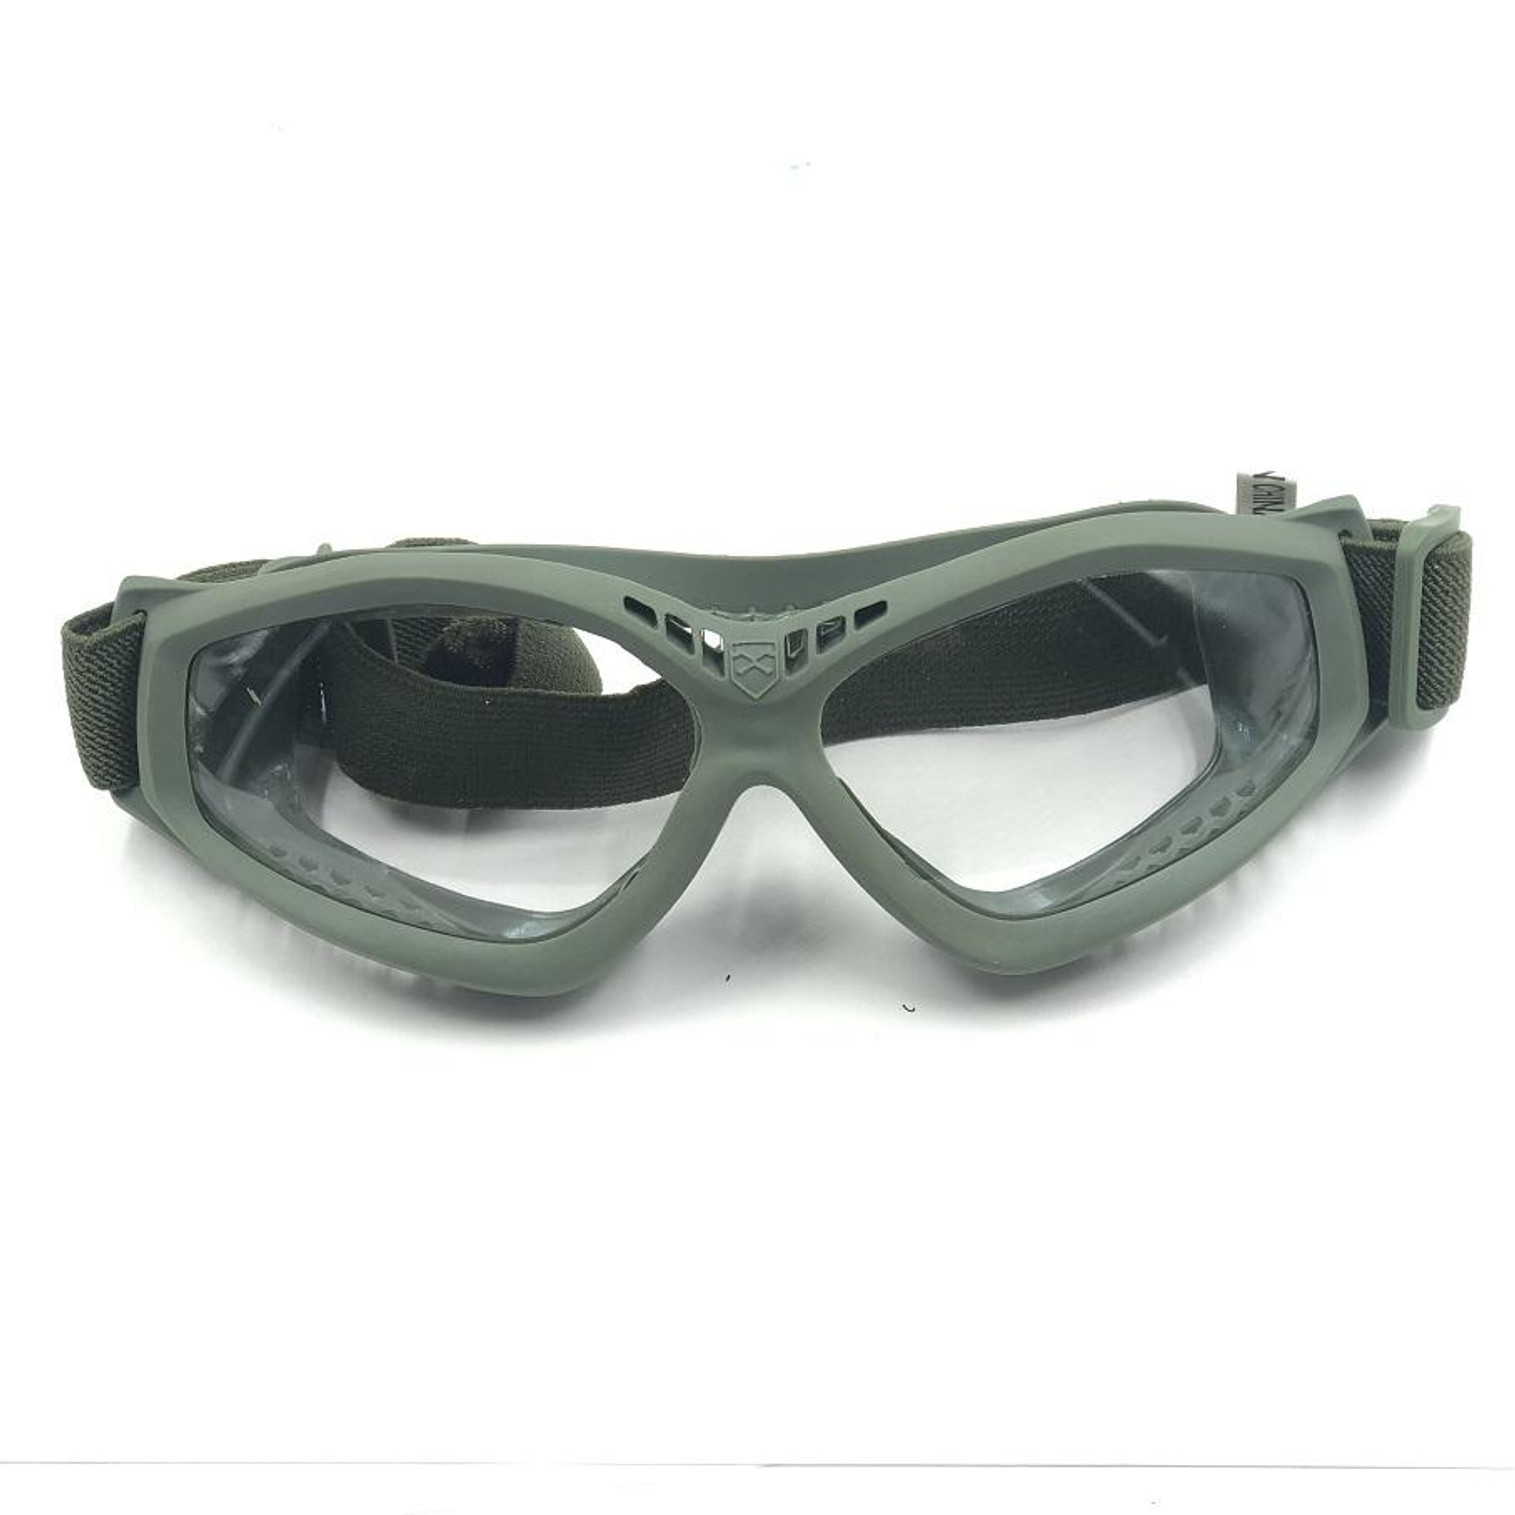 Bravo Airsoft Compact Goggles - OD